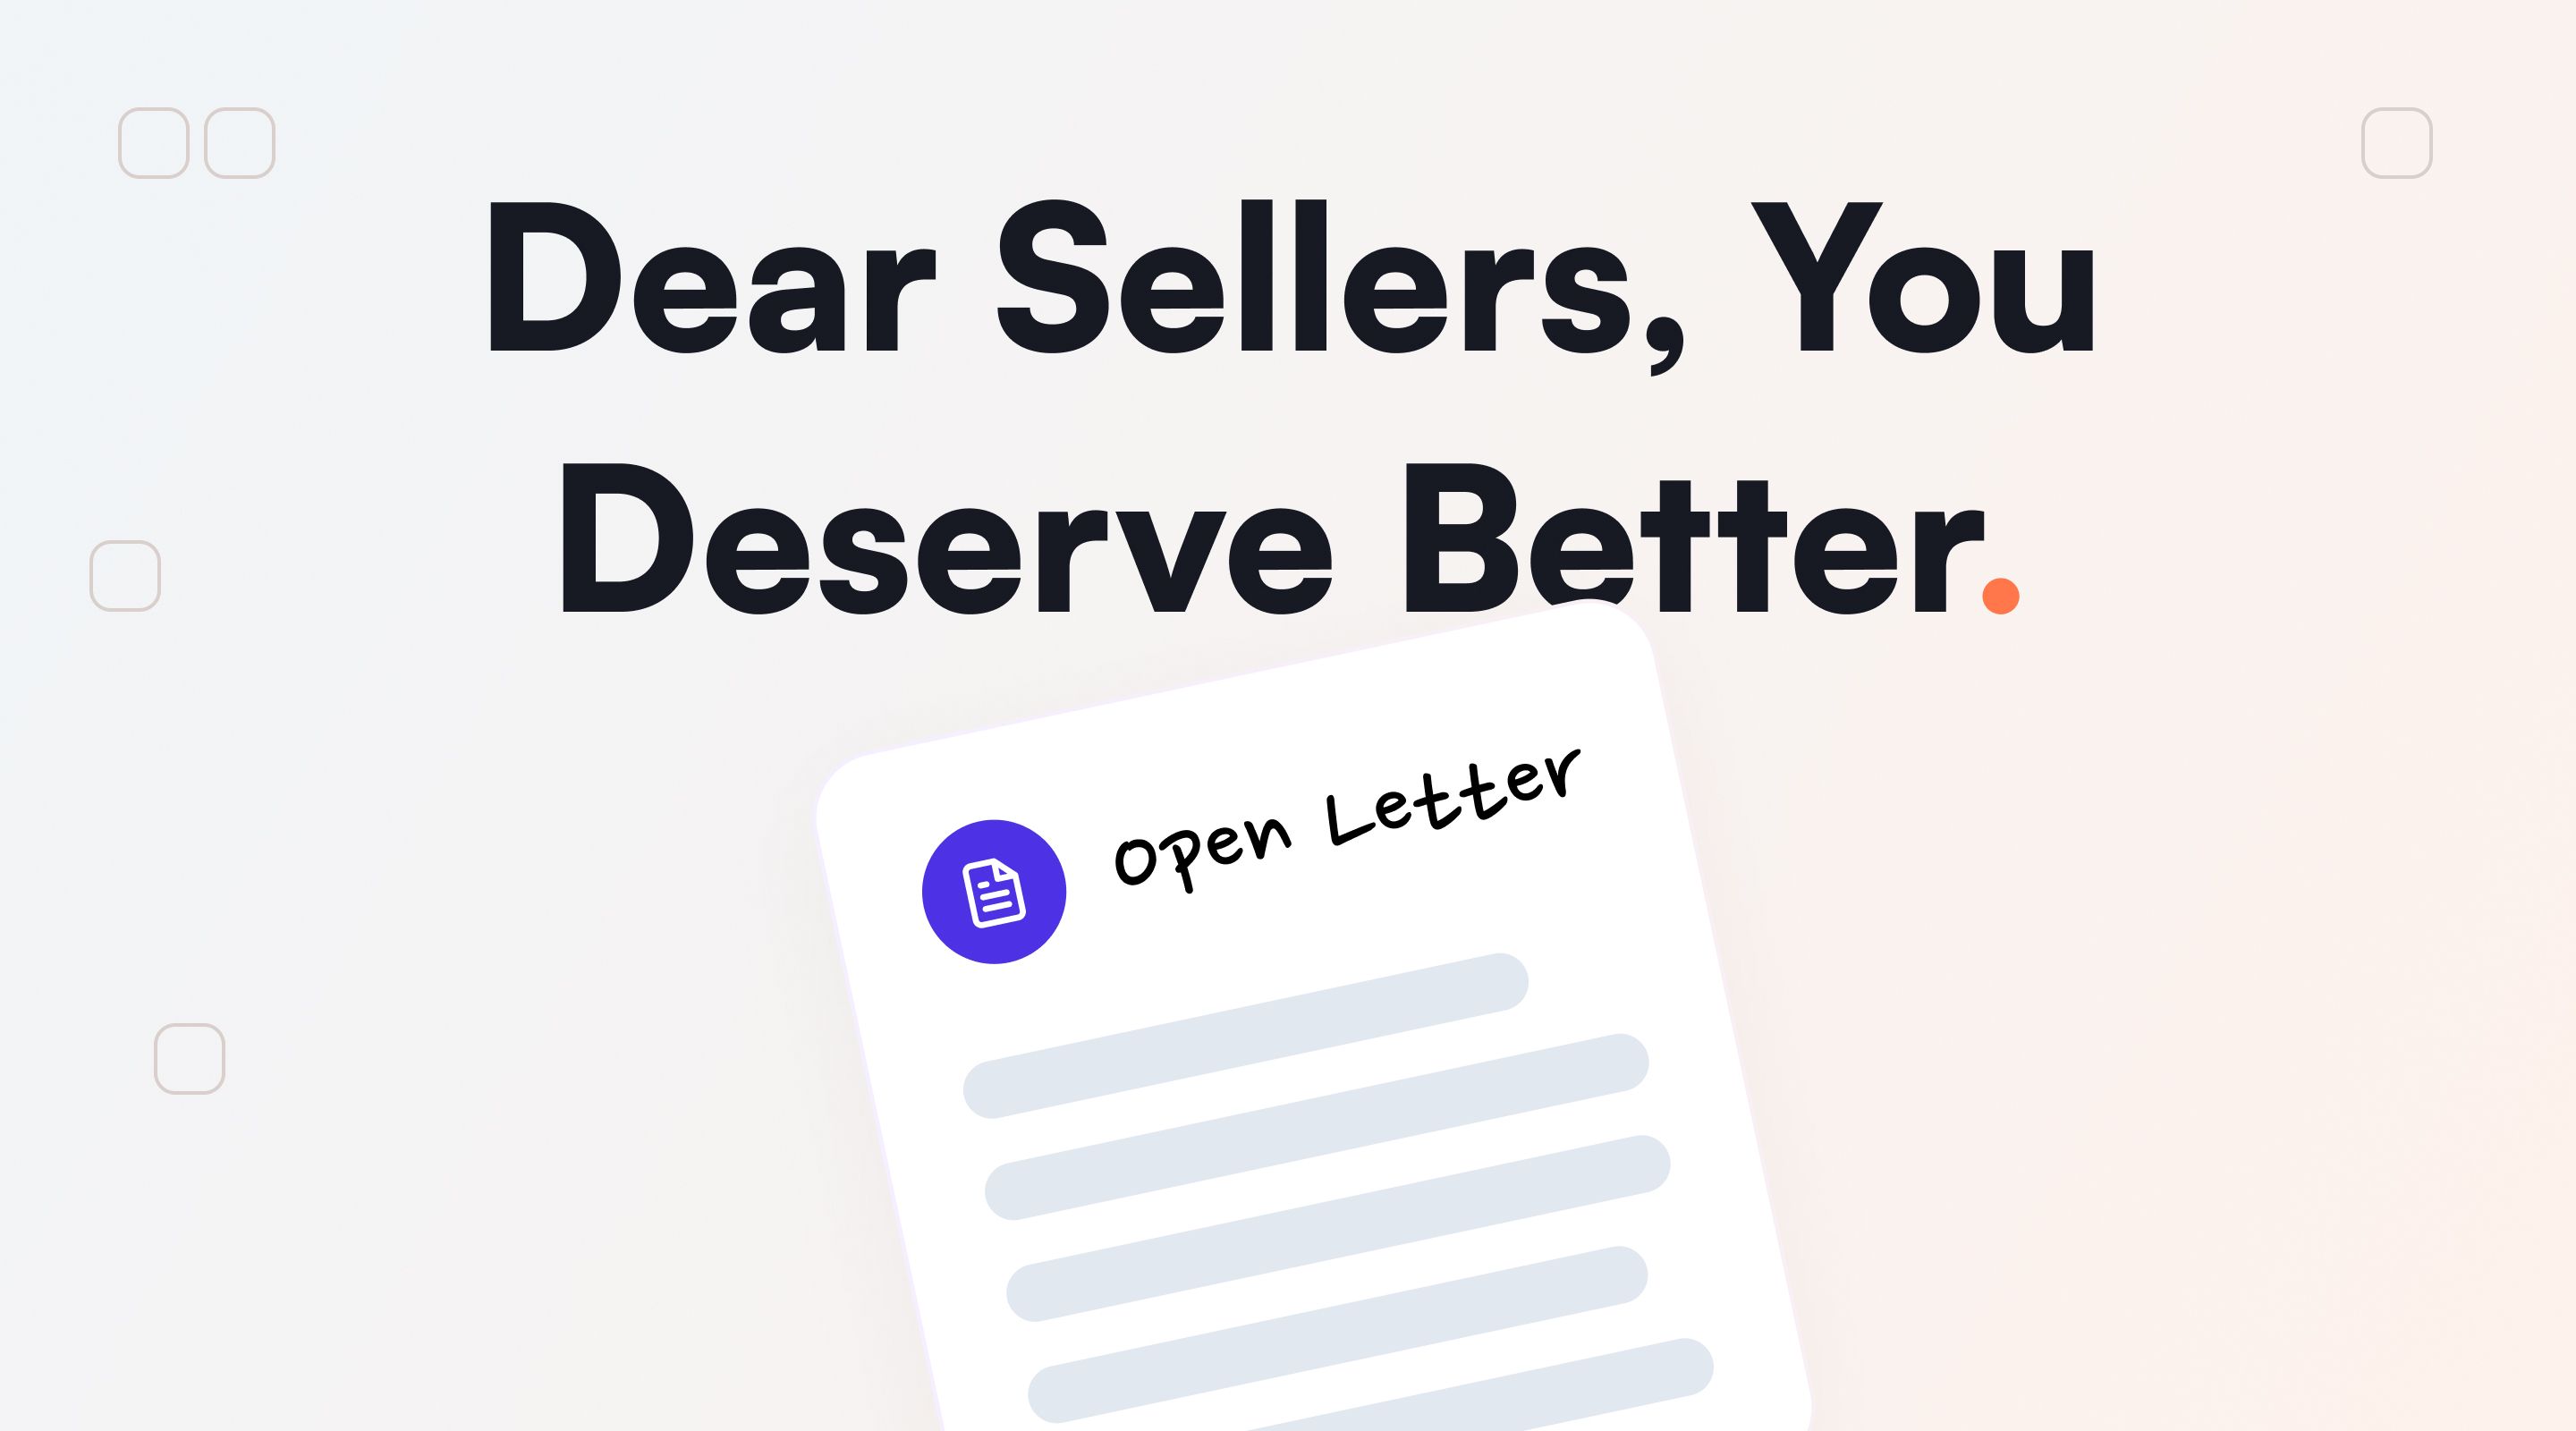 Dear Sellers, You Deserve Better!